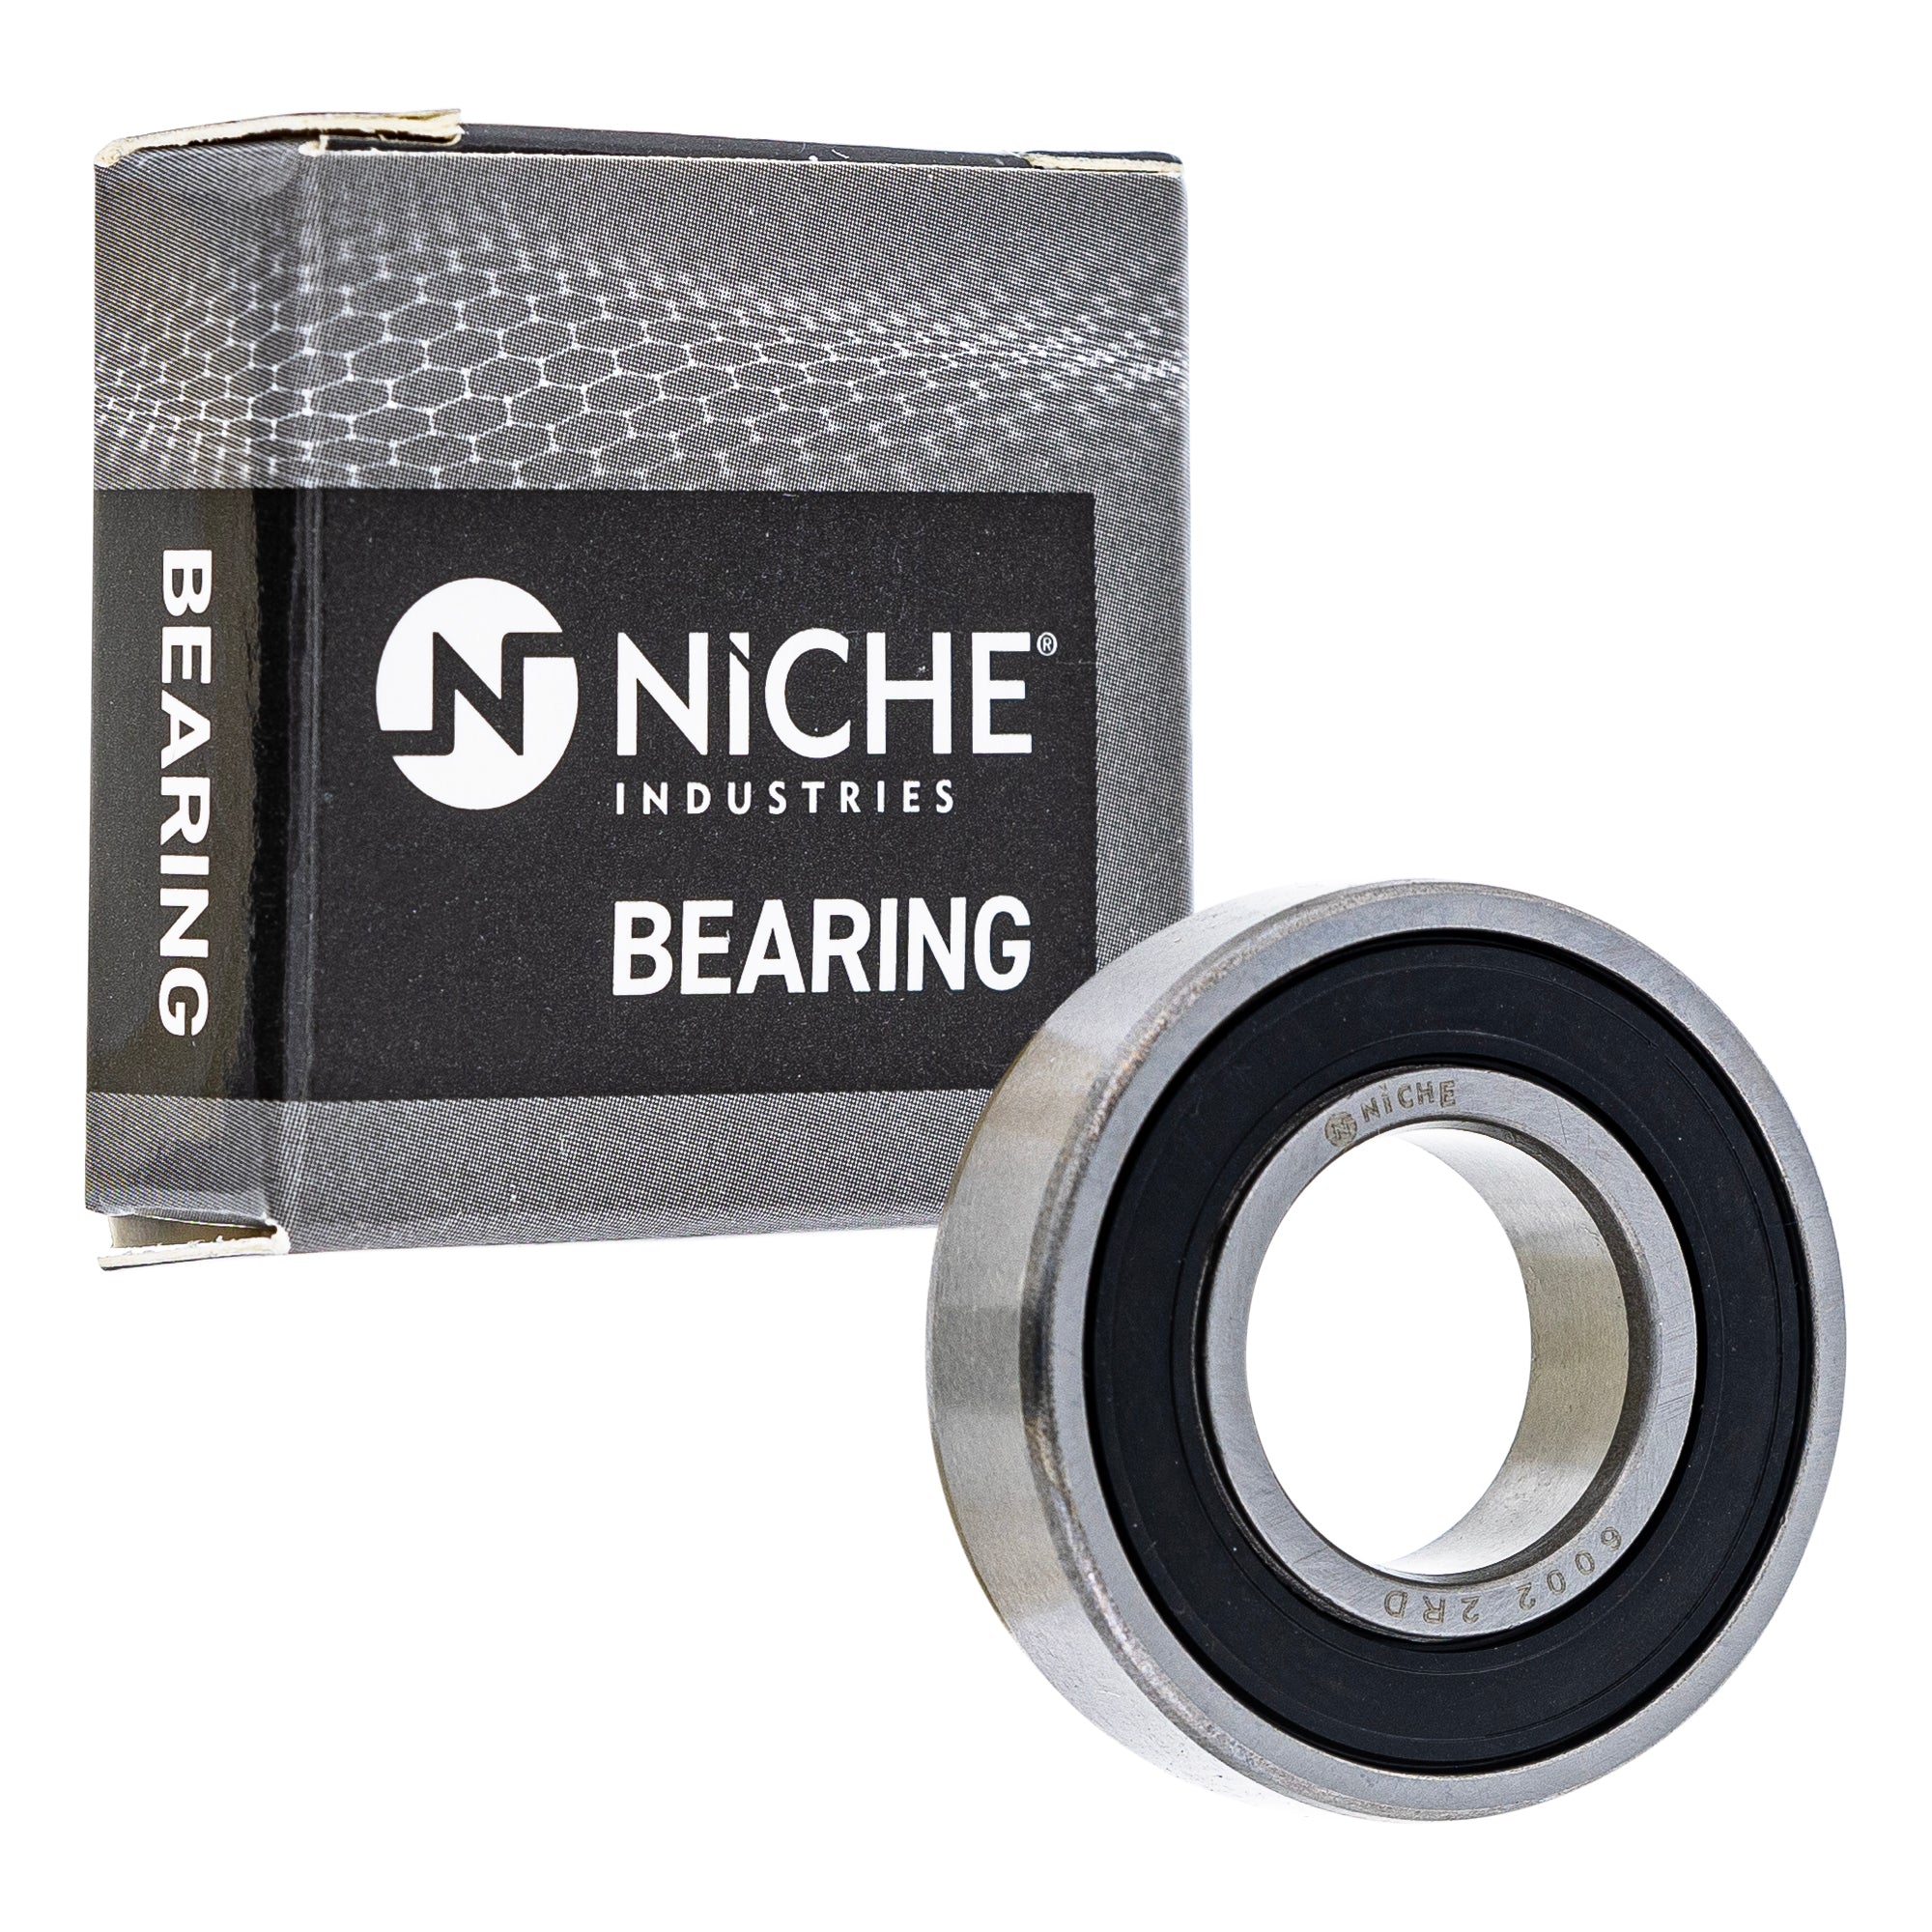 NICHE 519-CBB2334R Bearing 2-Pack for zOTHER HONDA Arctic Cat Textron